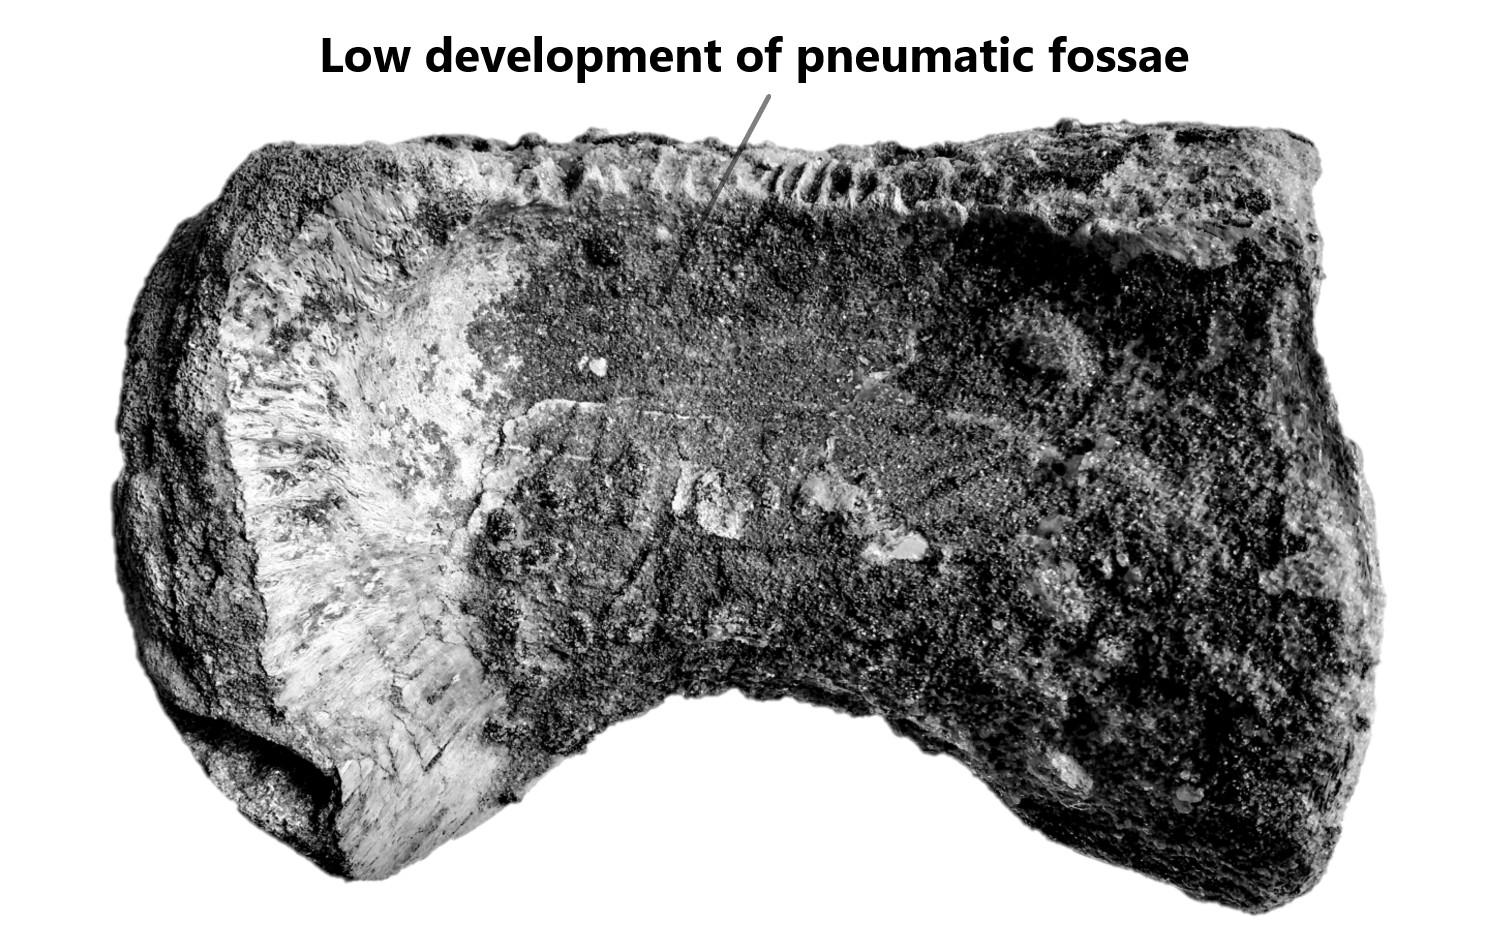 Left lateral view of mid dorsal vertebra tentatively refers as Spinosaurus dorsojuvencus. The vertebra centrum appears low or no development in pneumatic fossae.